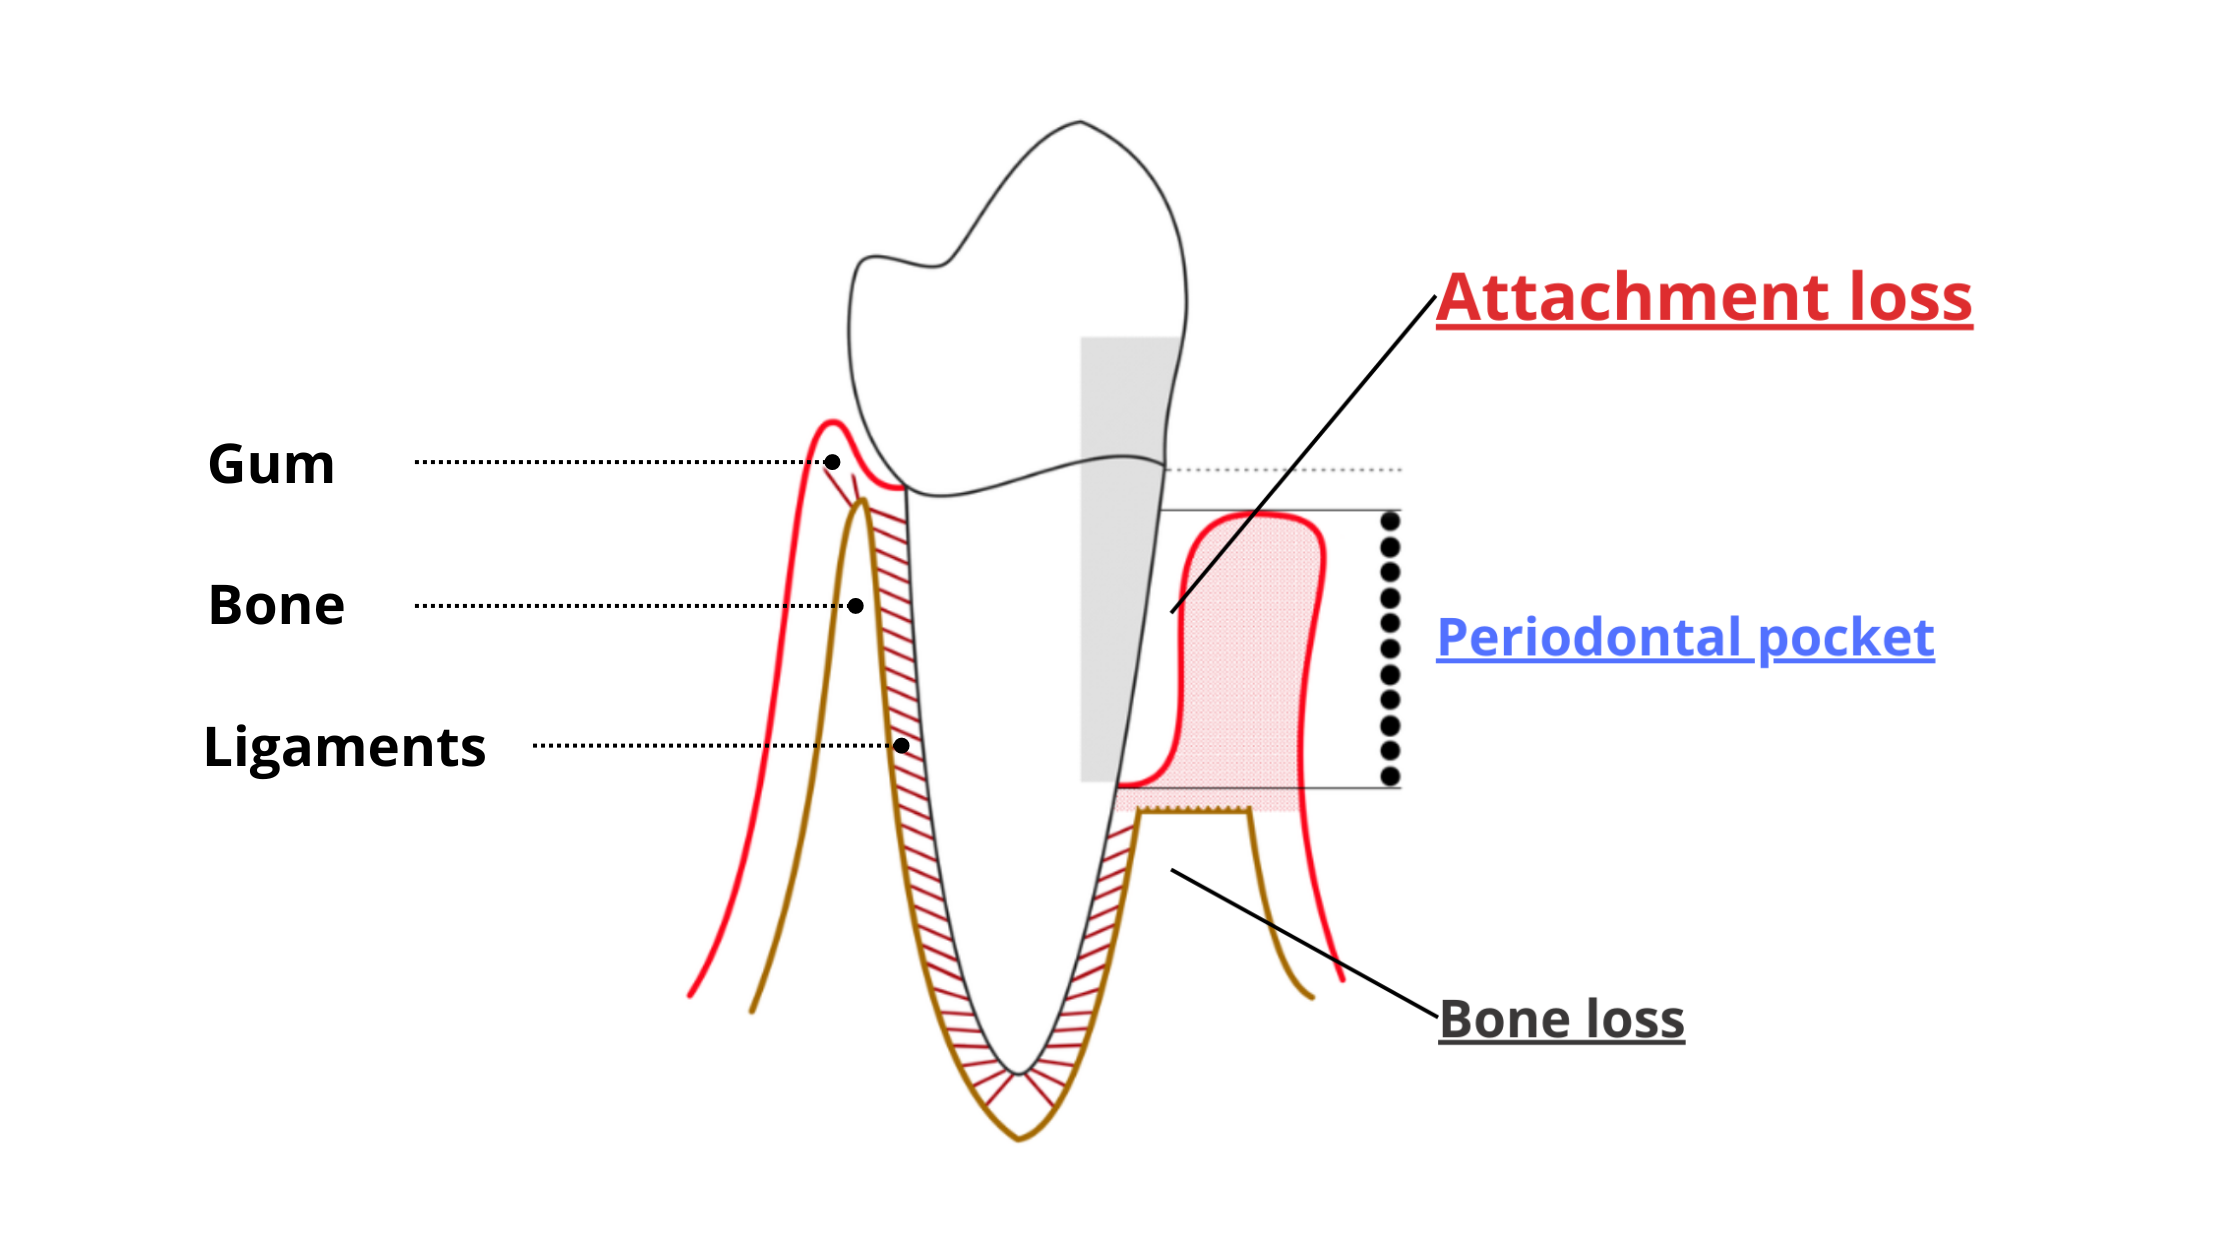 Periodontal attachment loss due to periodontitis